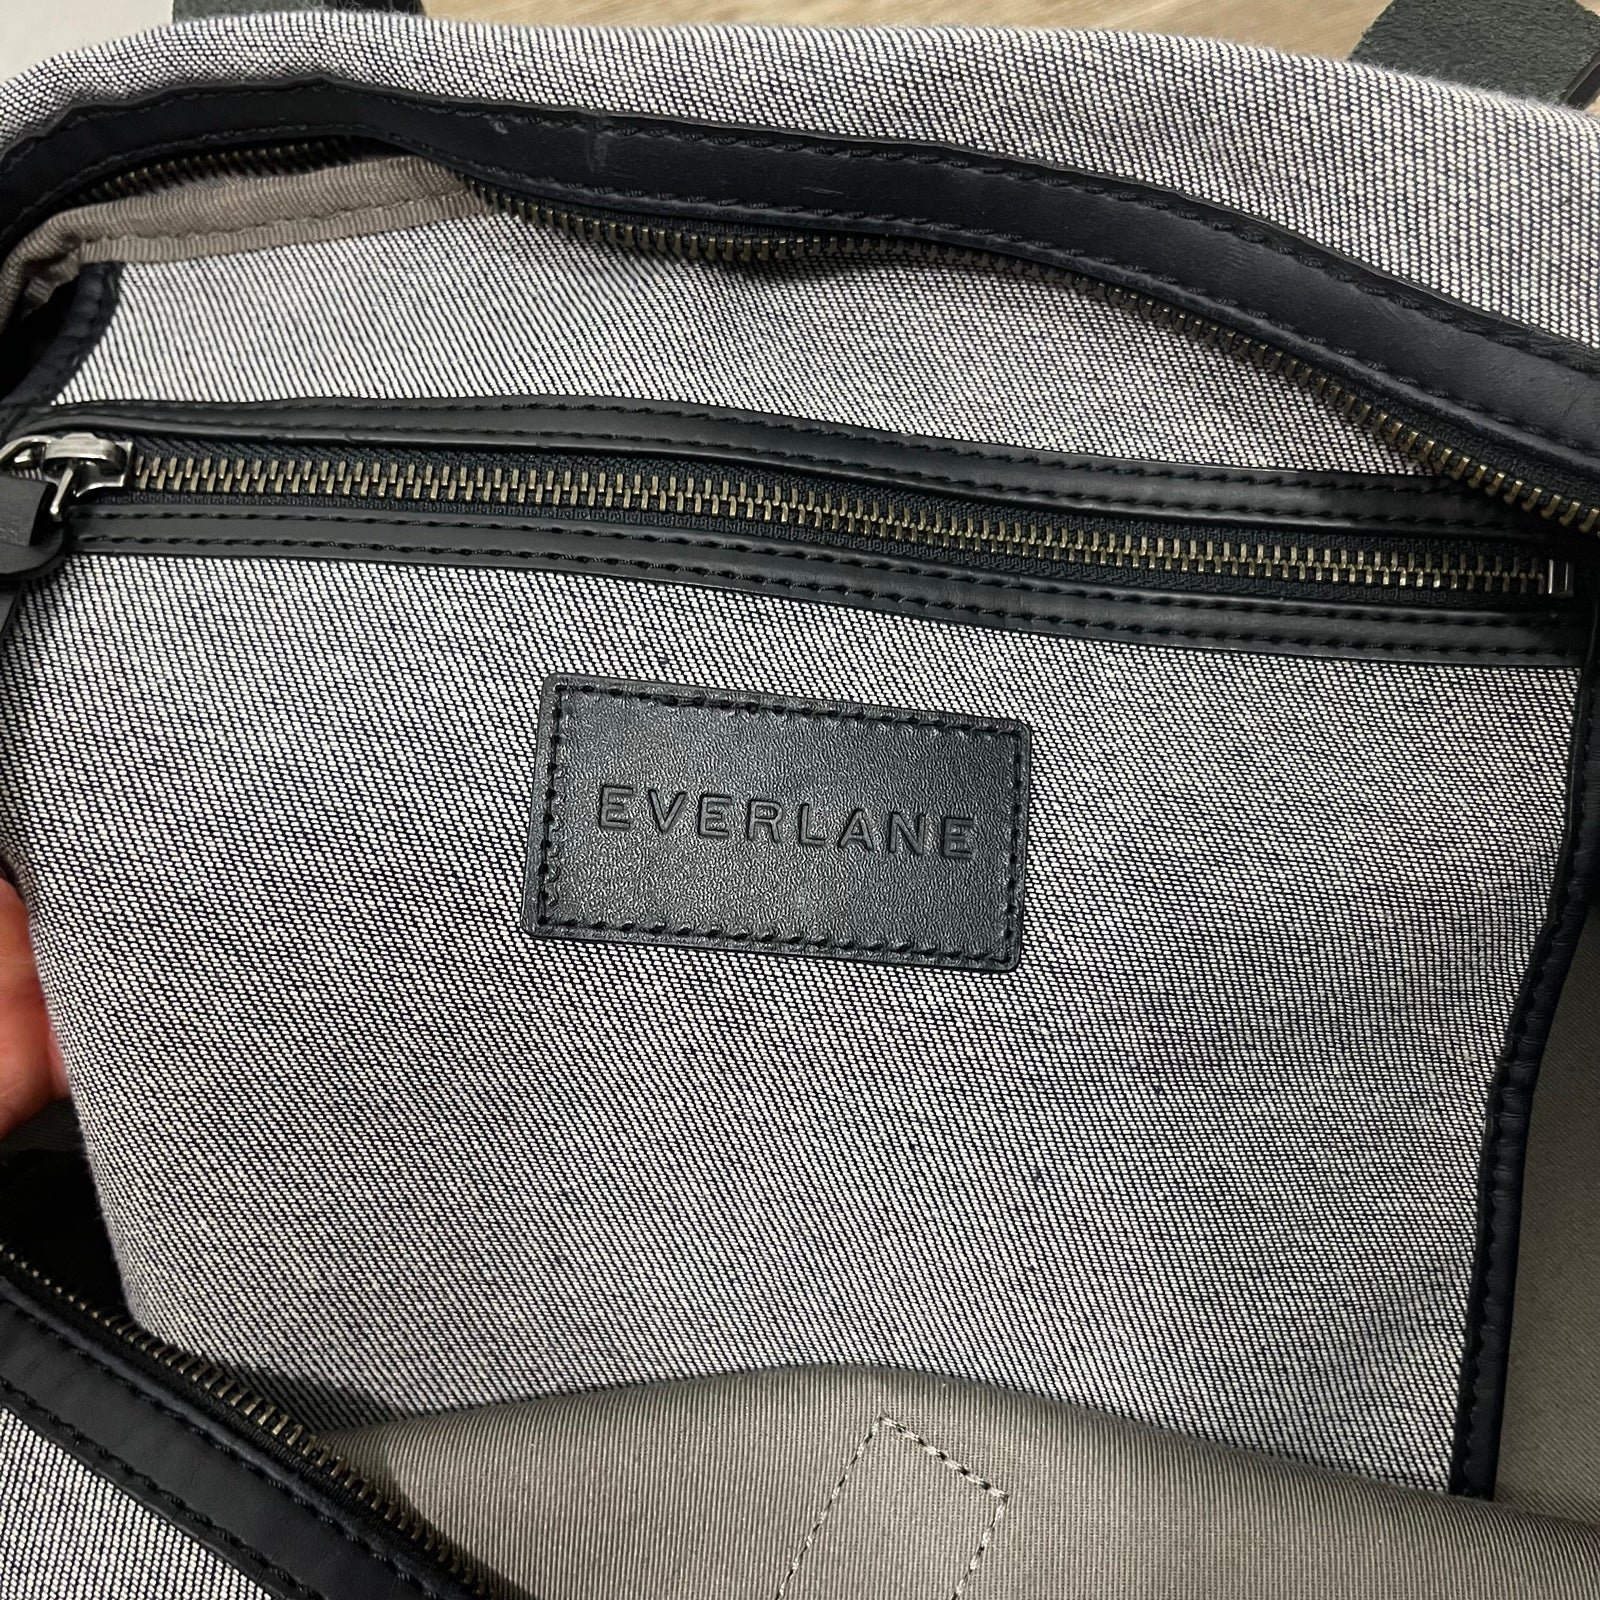 Everlane The Twill Weekender Travel Duffle Bag Grey Water resistant fdbxlz5OS